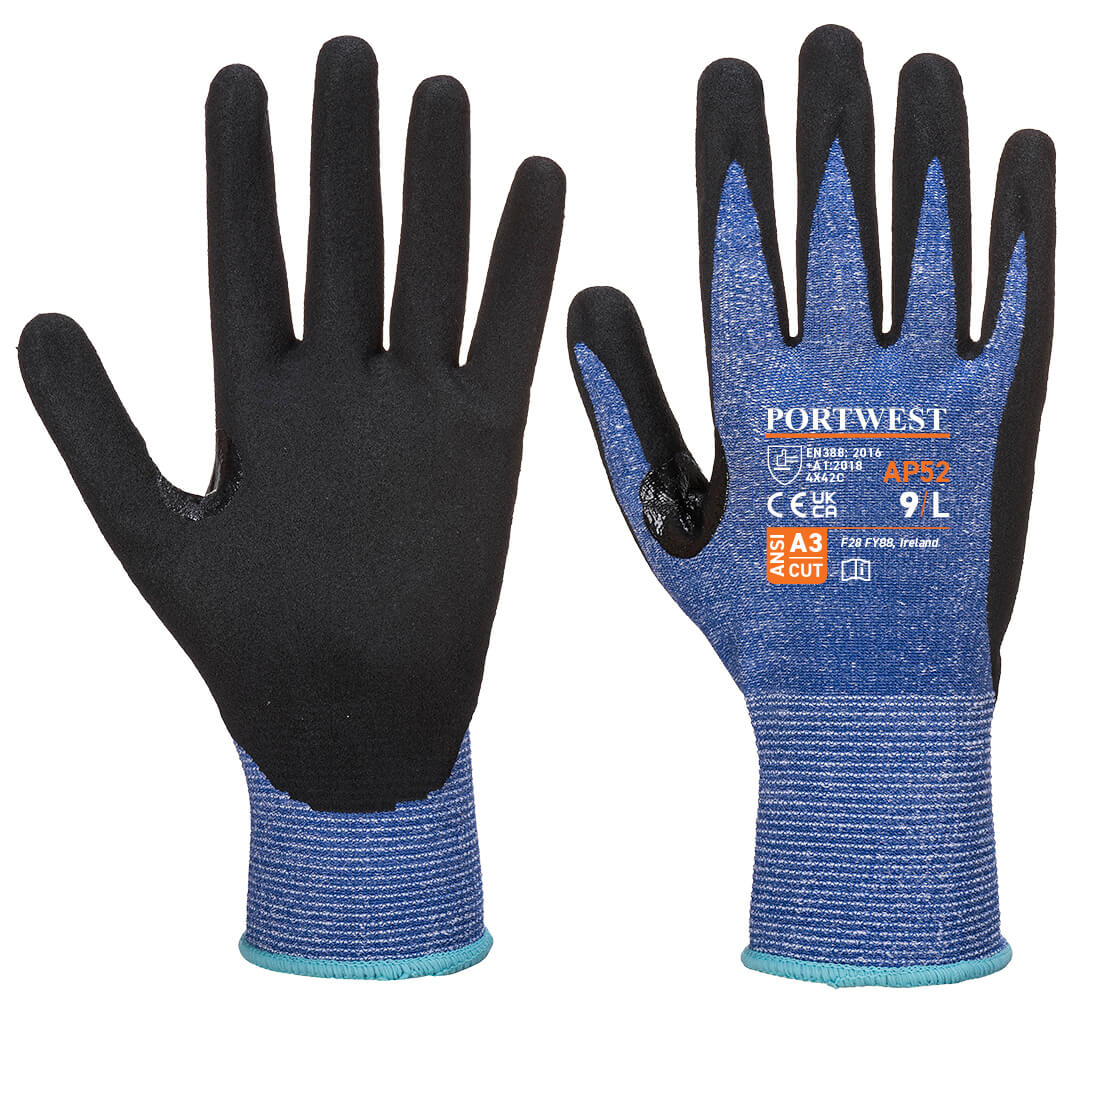 Dexti Cut Ultra Glove, Morgans PW